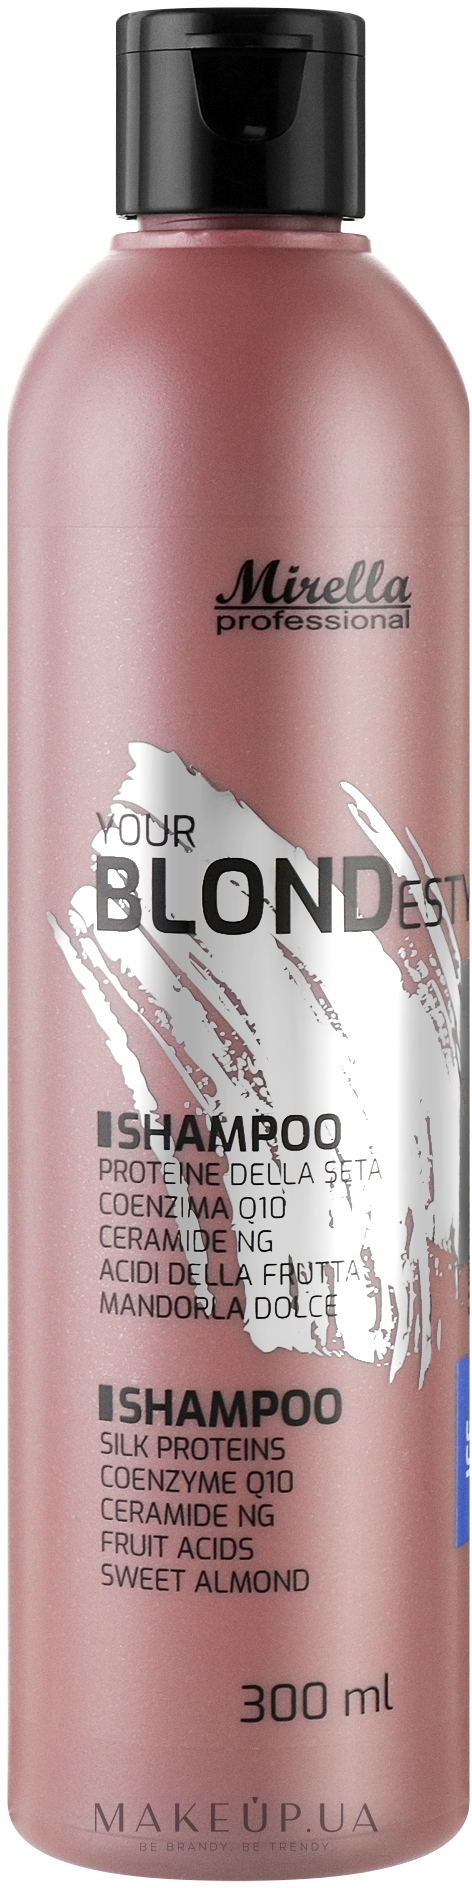 Шампунь для ледяных оттенков блонд - Mirella Ice Your Blondesty Shampoo — фото 300ml